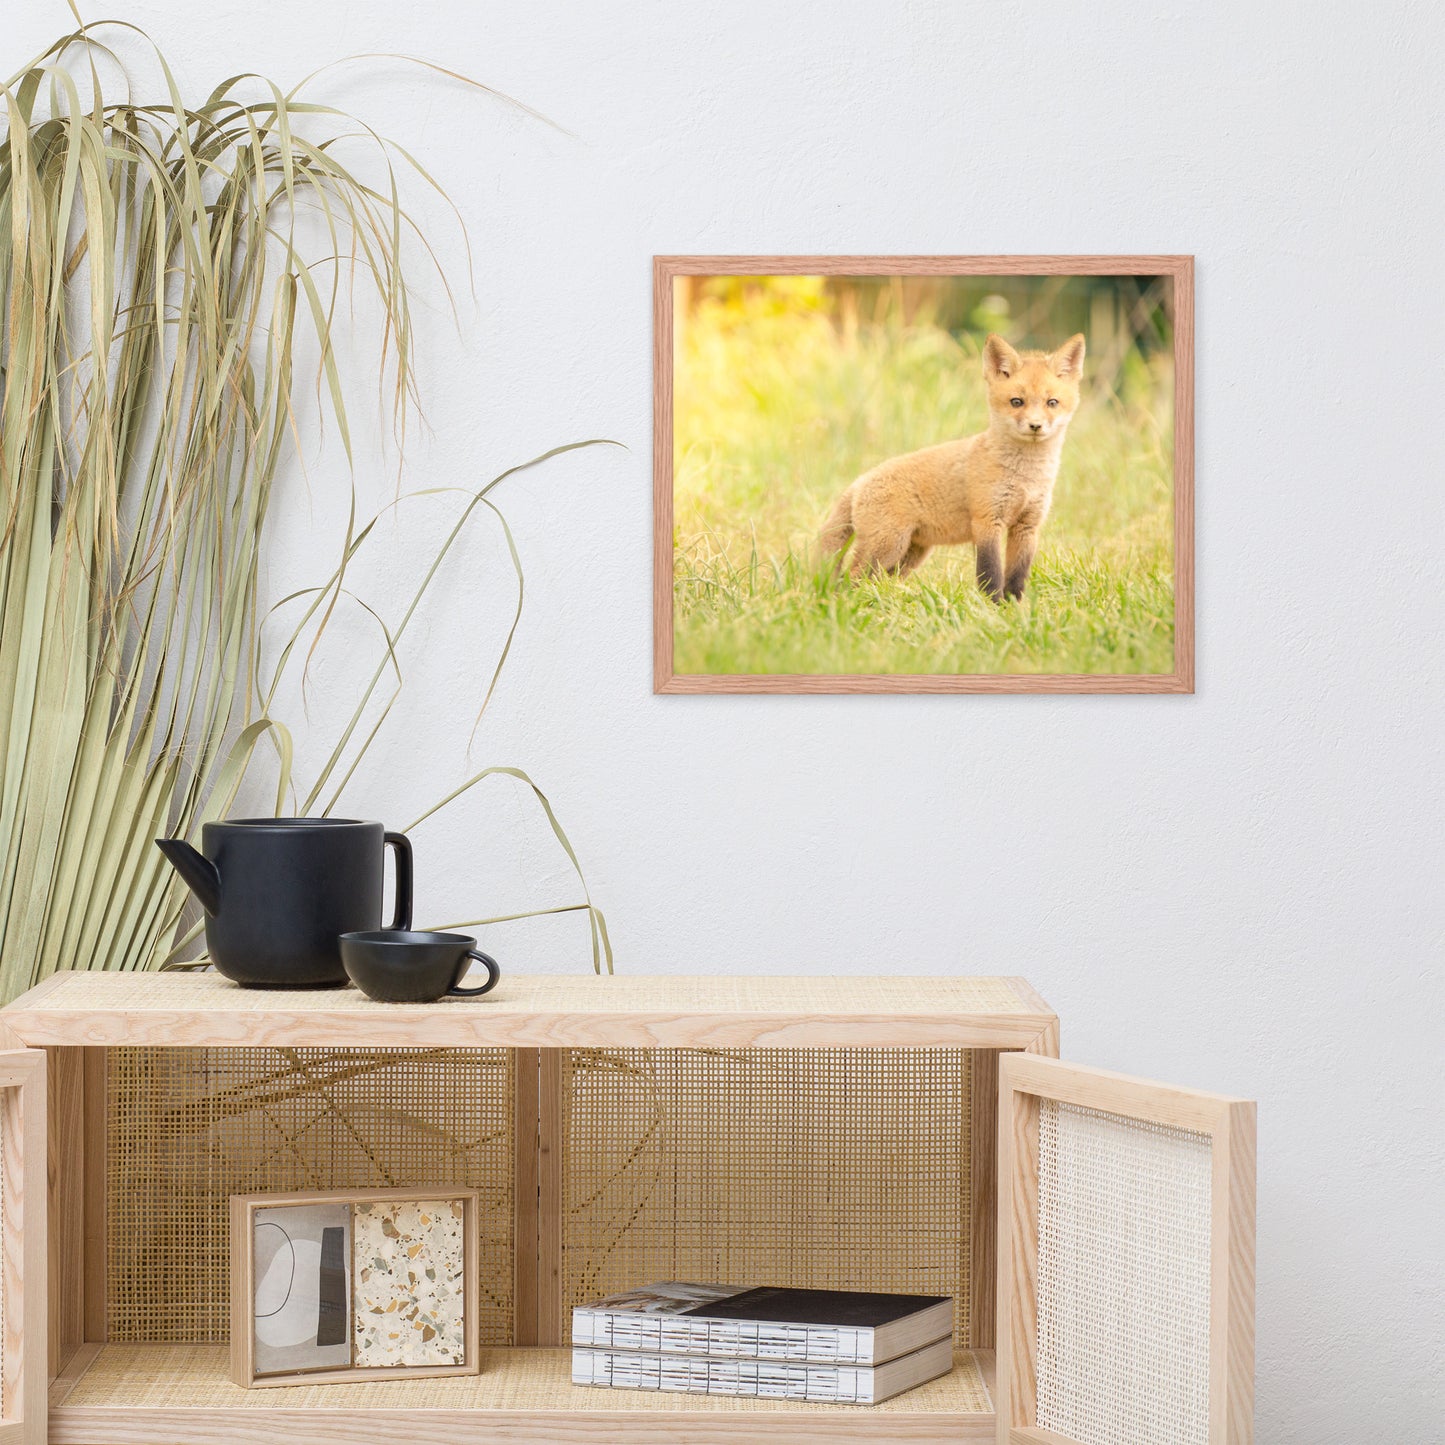 Best Nursery Prints: Baby Red Fox in the Sun - Animal / Wildlife / Nature Artwork - Wall Decor - Framed Wall Art Print